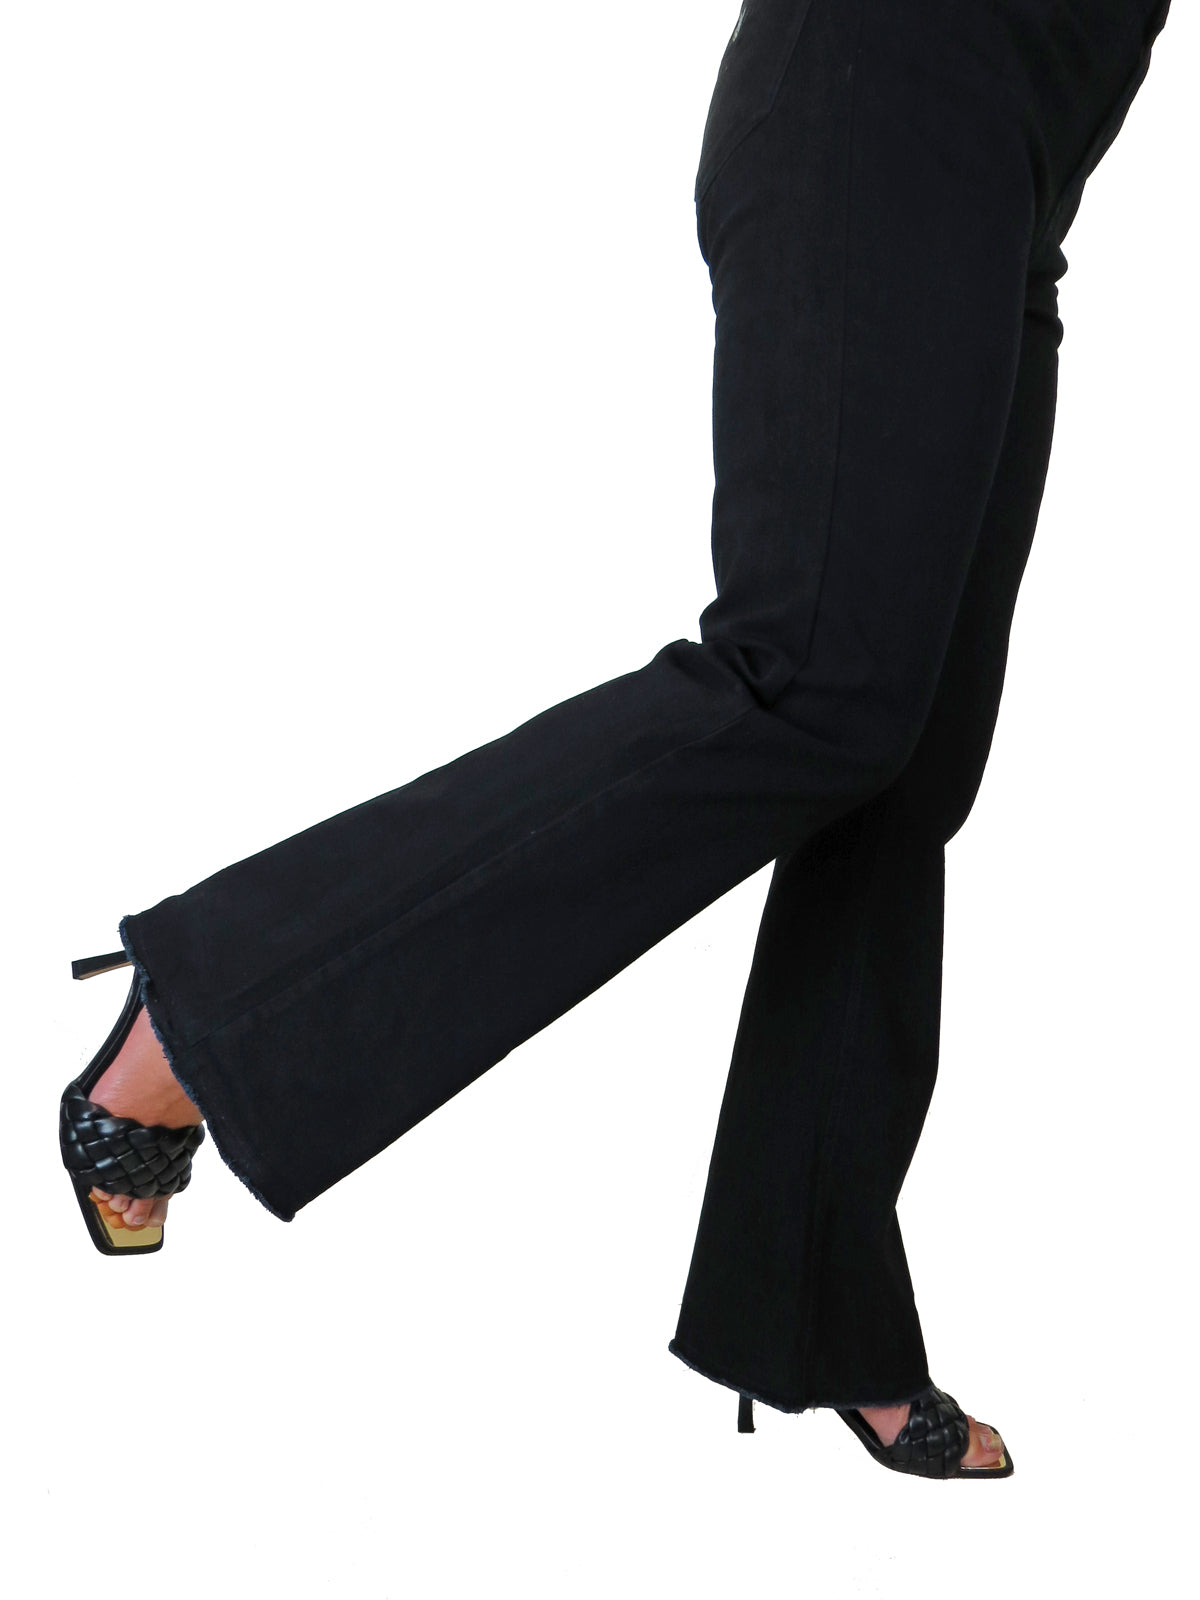 Women's Flared Stretch Denim High Waist Jeans With Frayed Hem Black